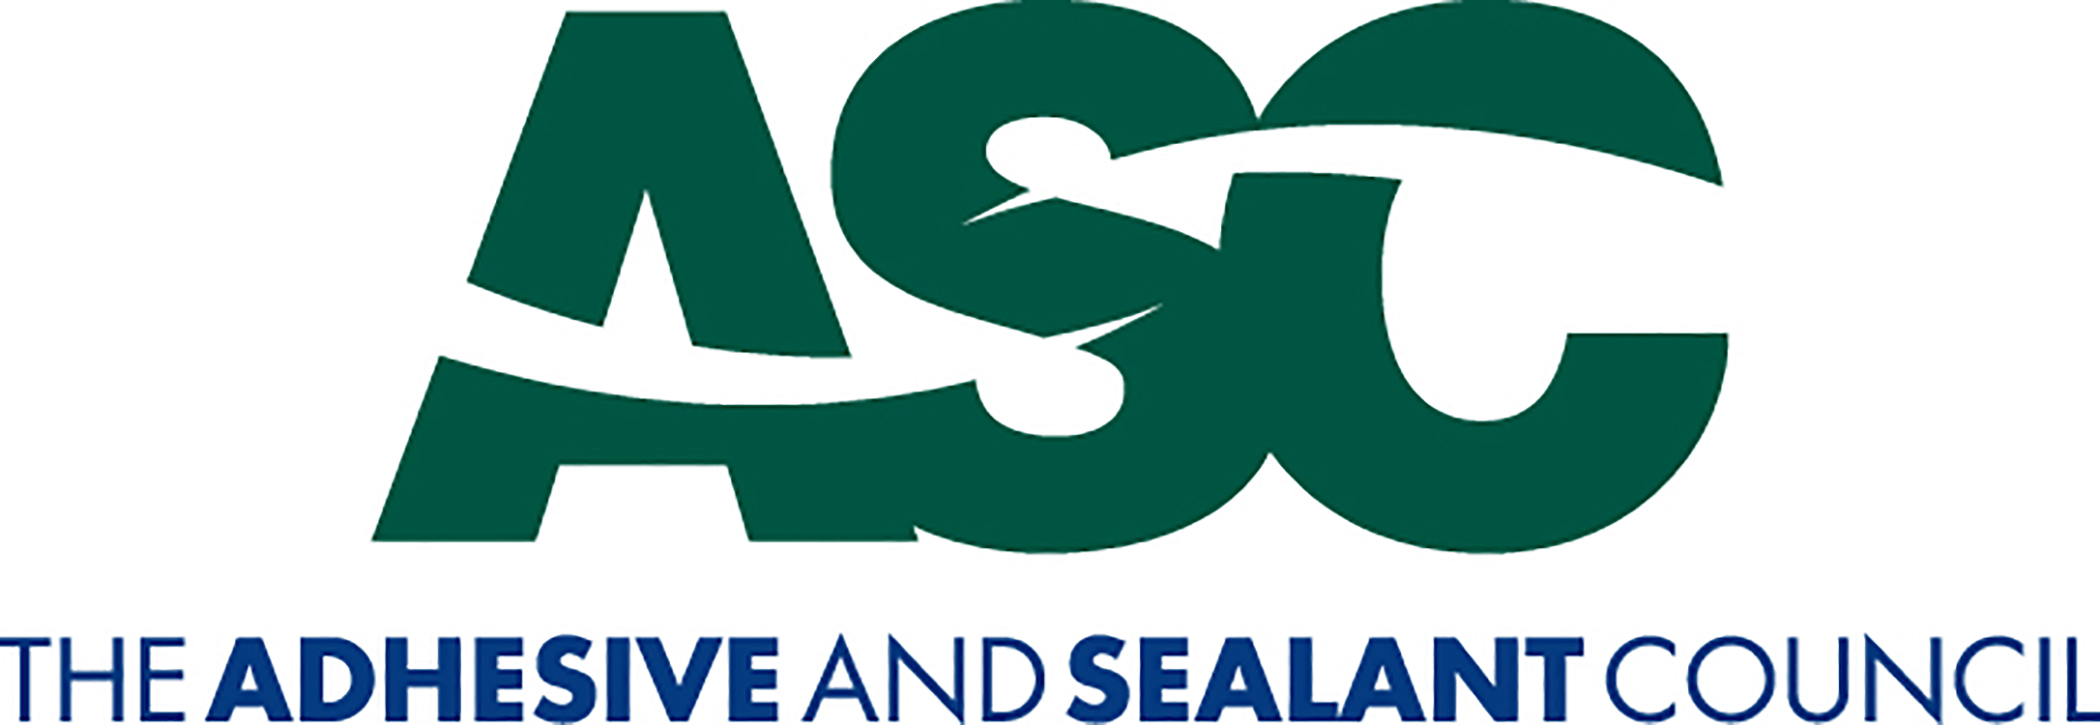 medmix becomes a member at Adhesive and Sealant Council (ASC)